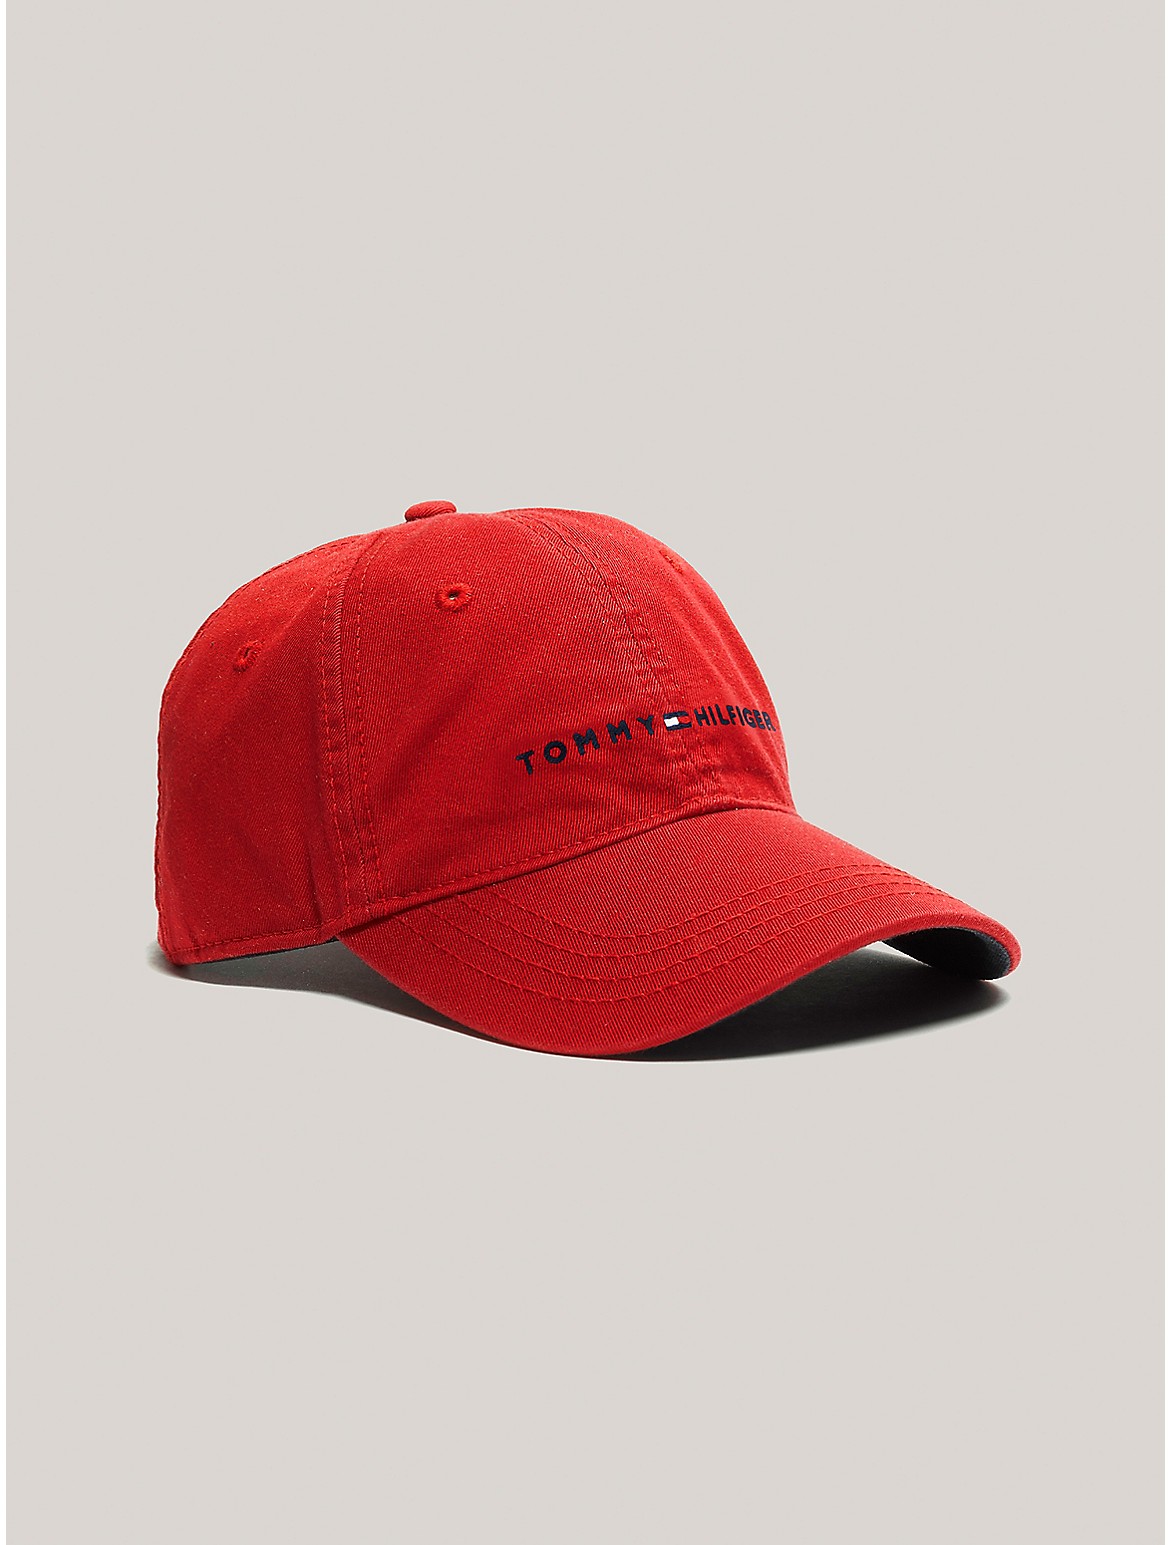 Tommy Hilfiger Men's Embroidered Tommy Logo Baseball Cap - Red